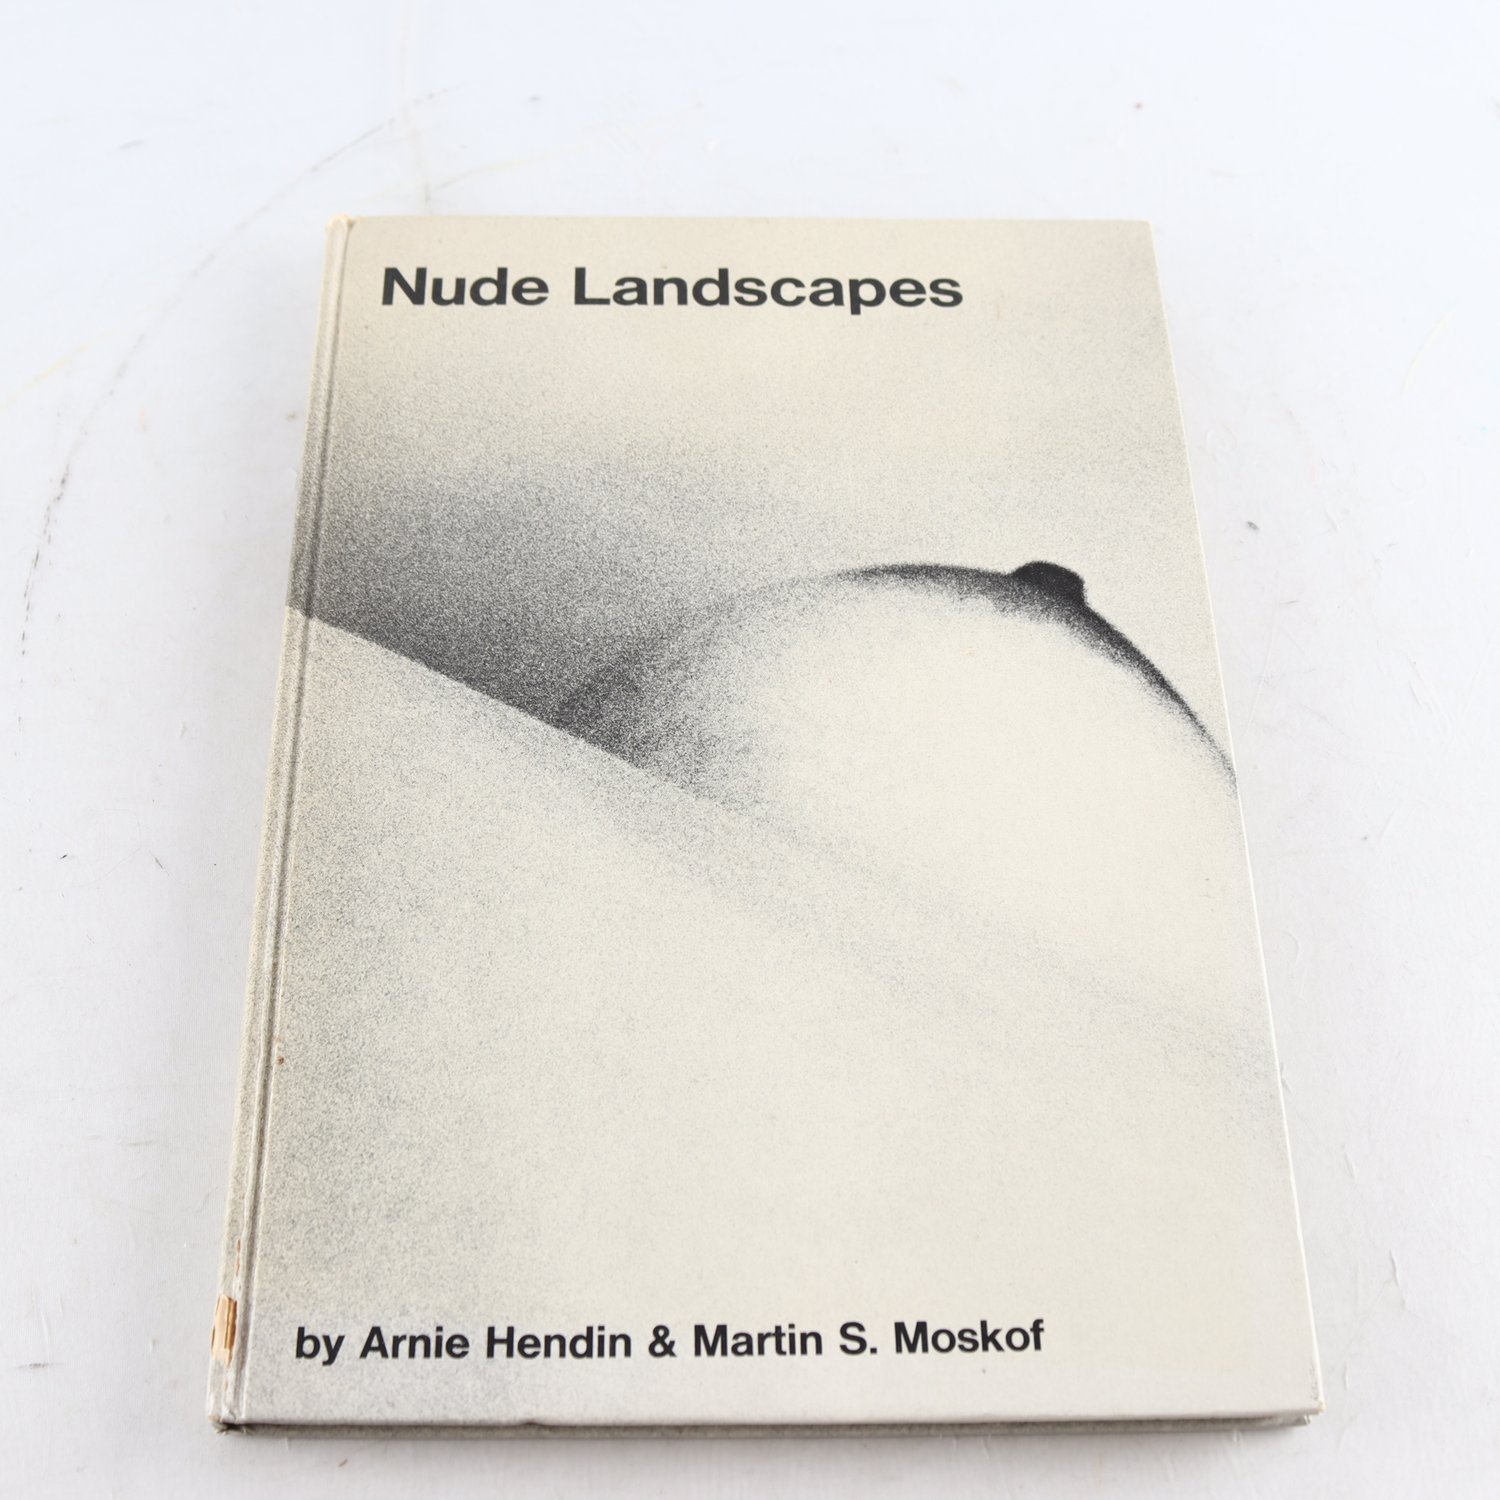 Nude Landscapes, by Arnie Hendin & Martin S. Moskof